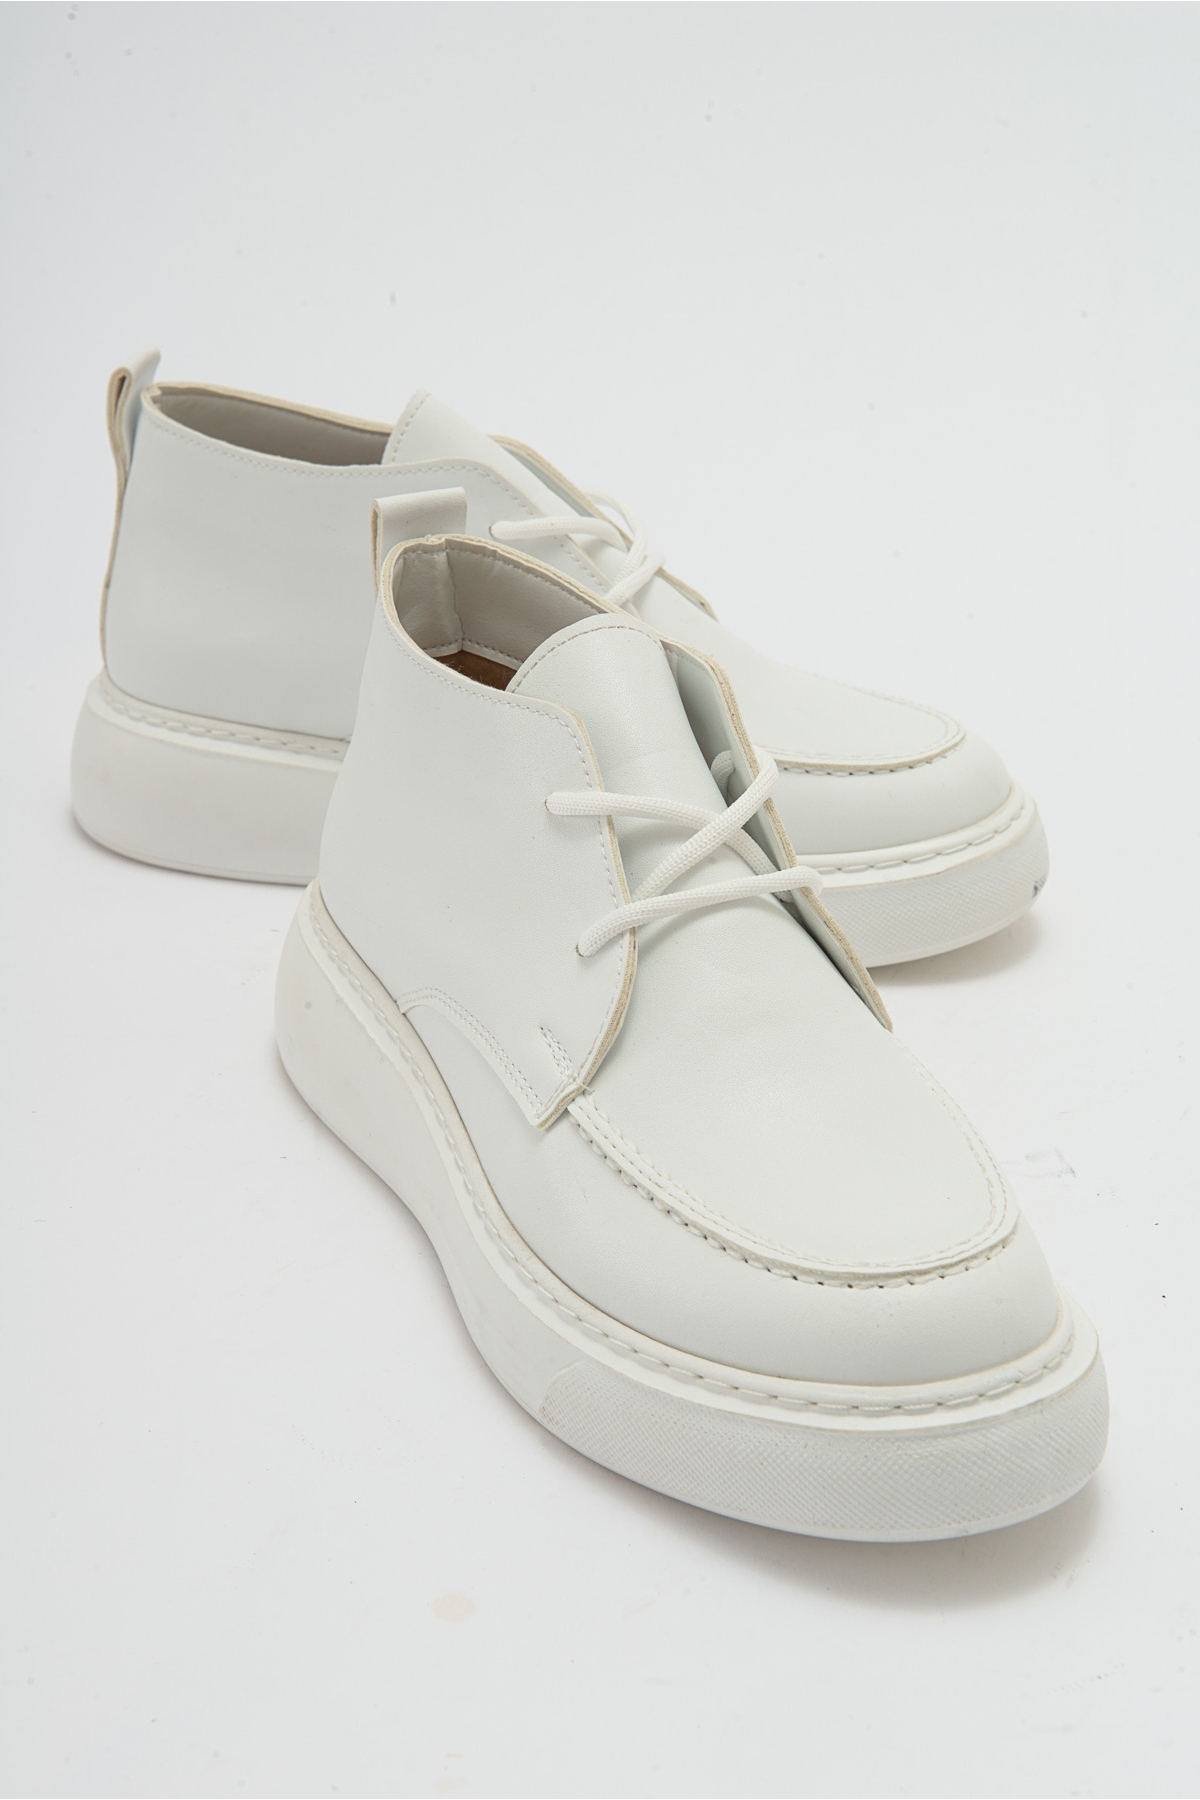 LuviShoes VALVE Women's White Skin Boots